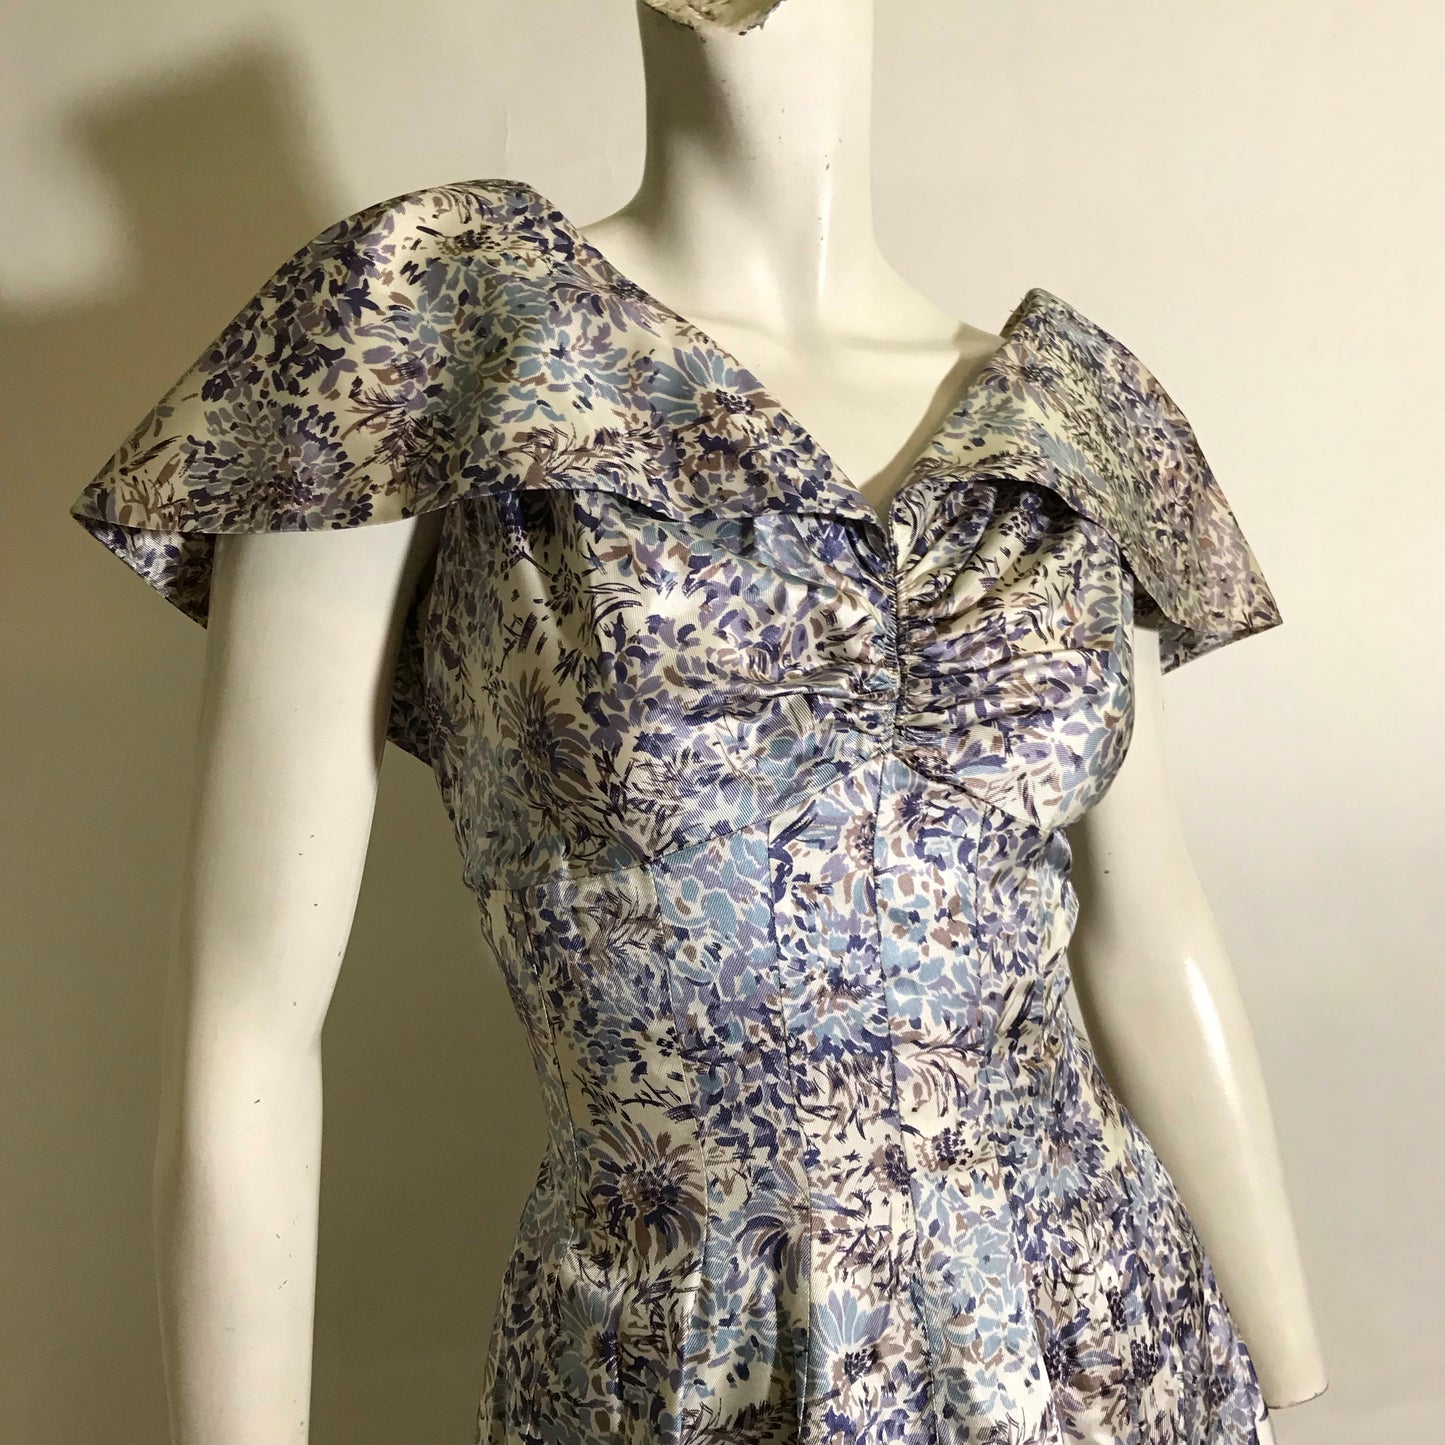 Shawl Collar Blue and Lilac Floral Print Princess Seamed Party Dress circa 1950s